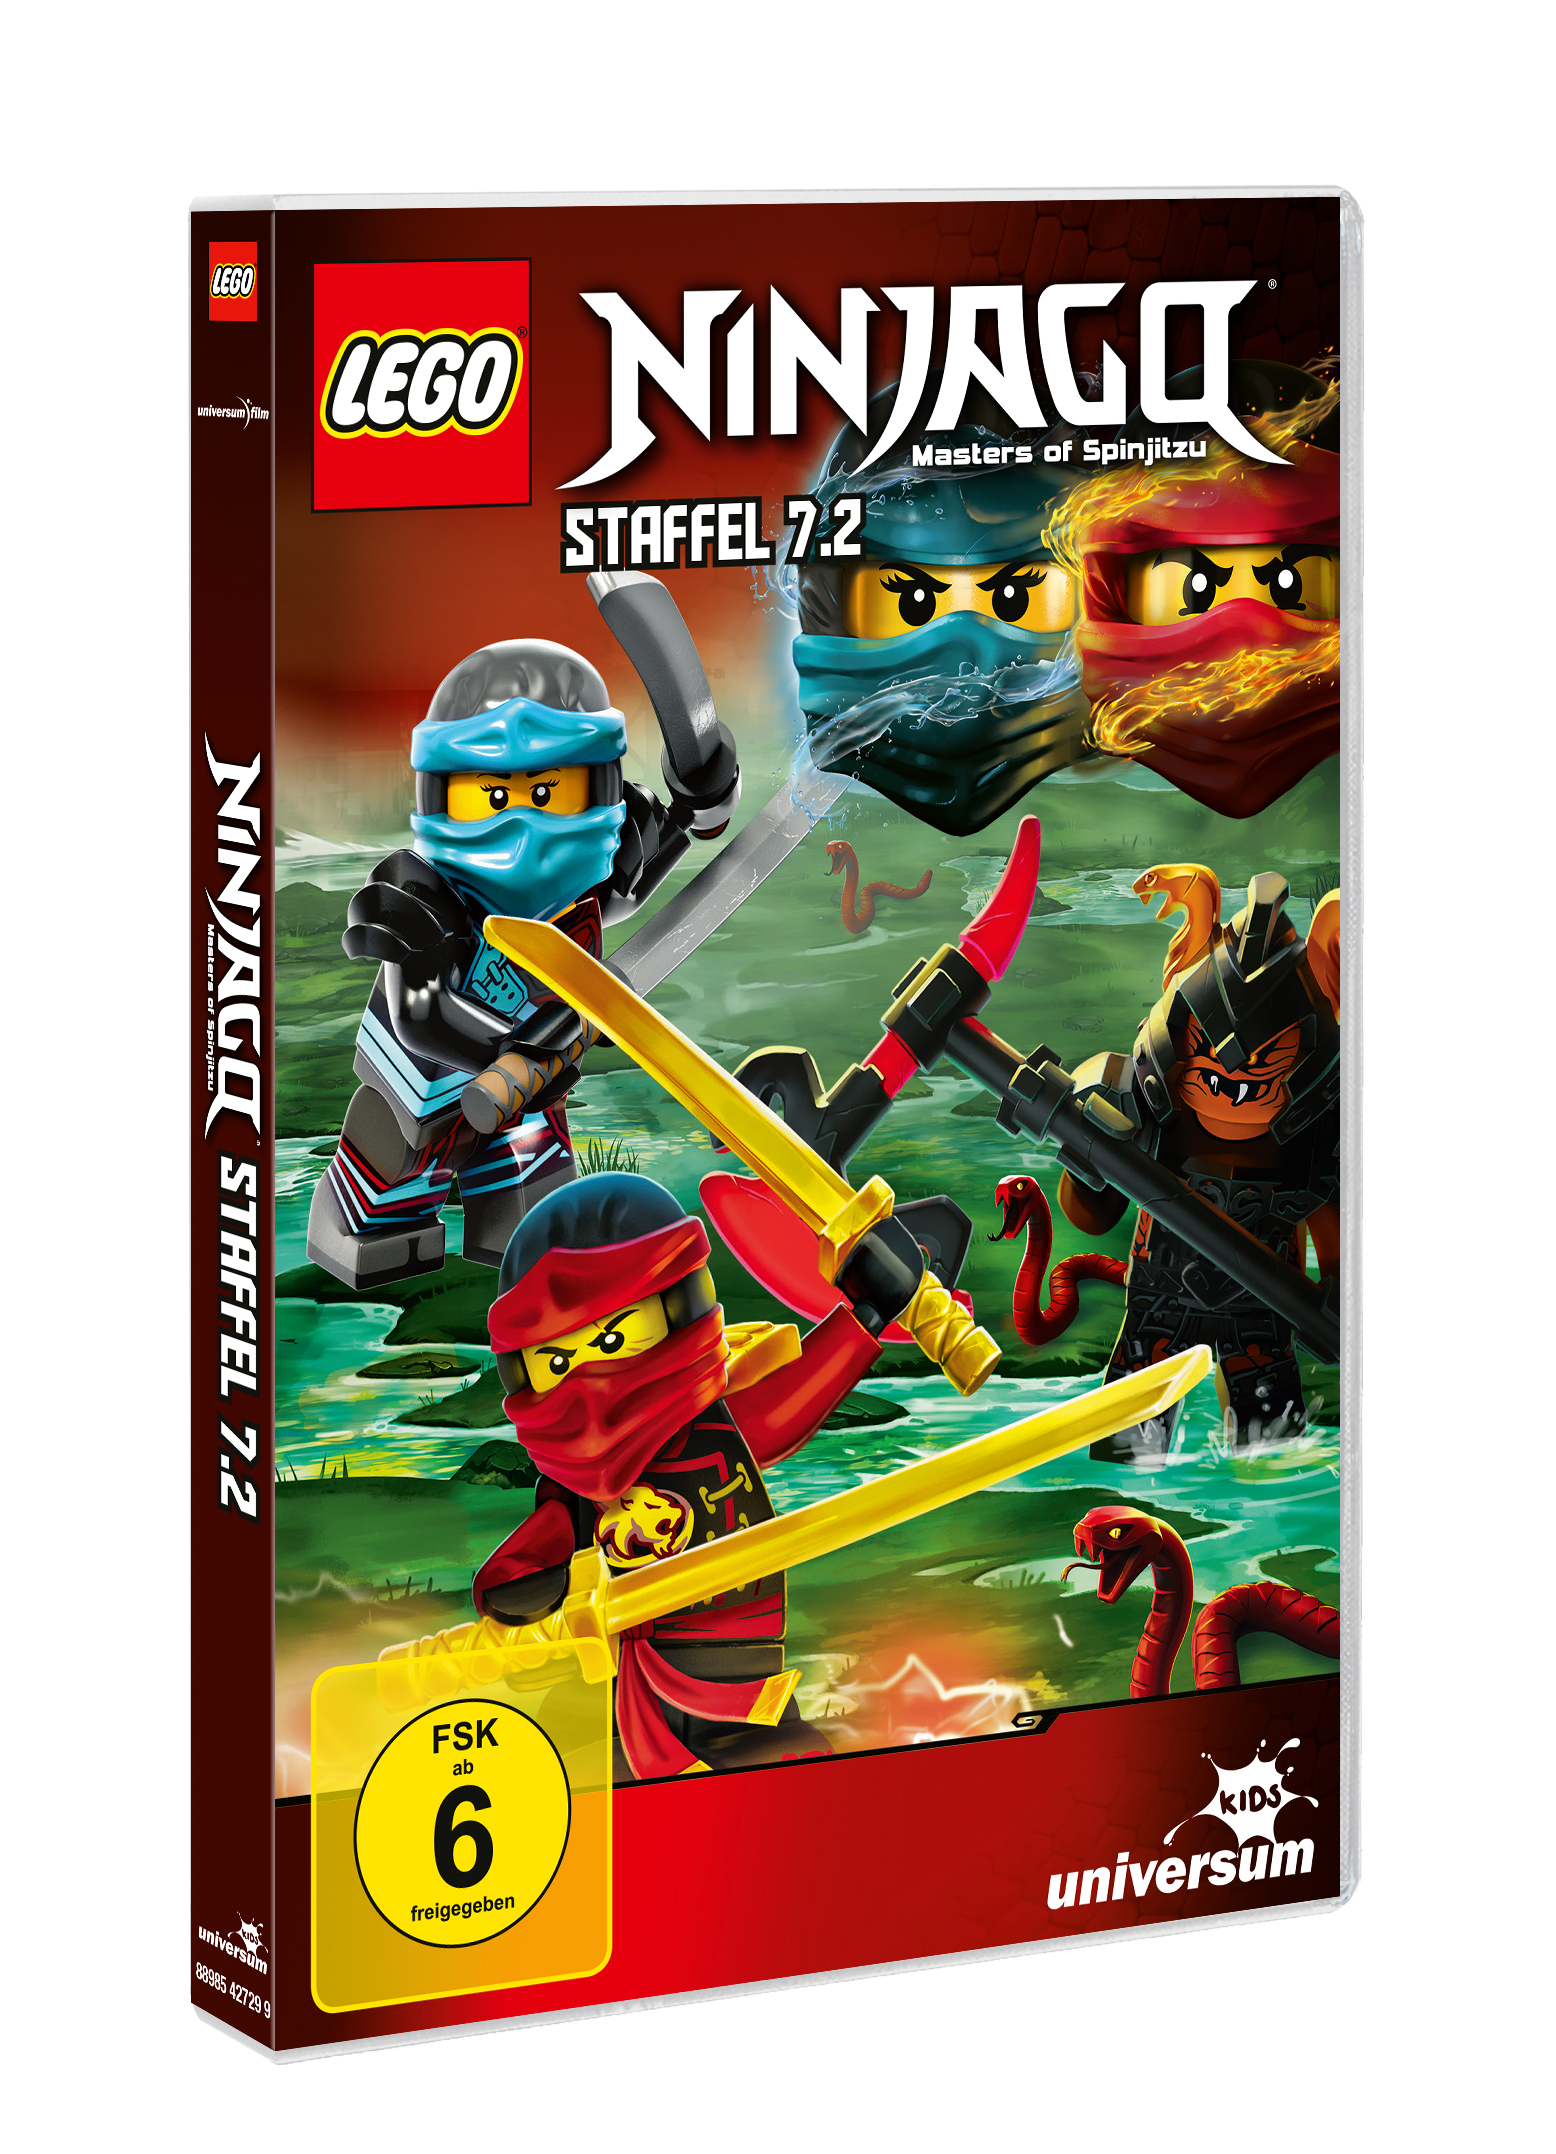 7.2 Staffel Ninjago LEGO DVD - -